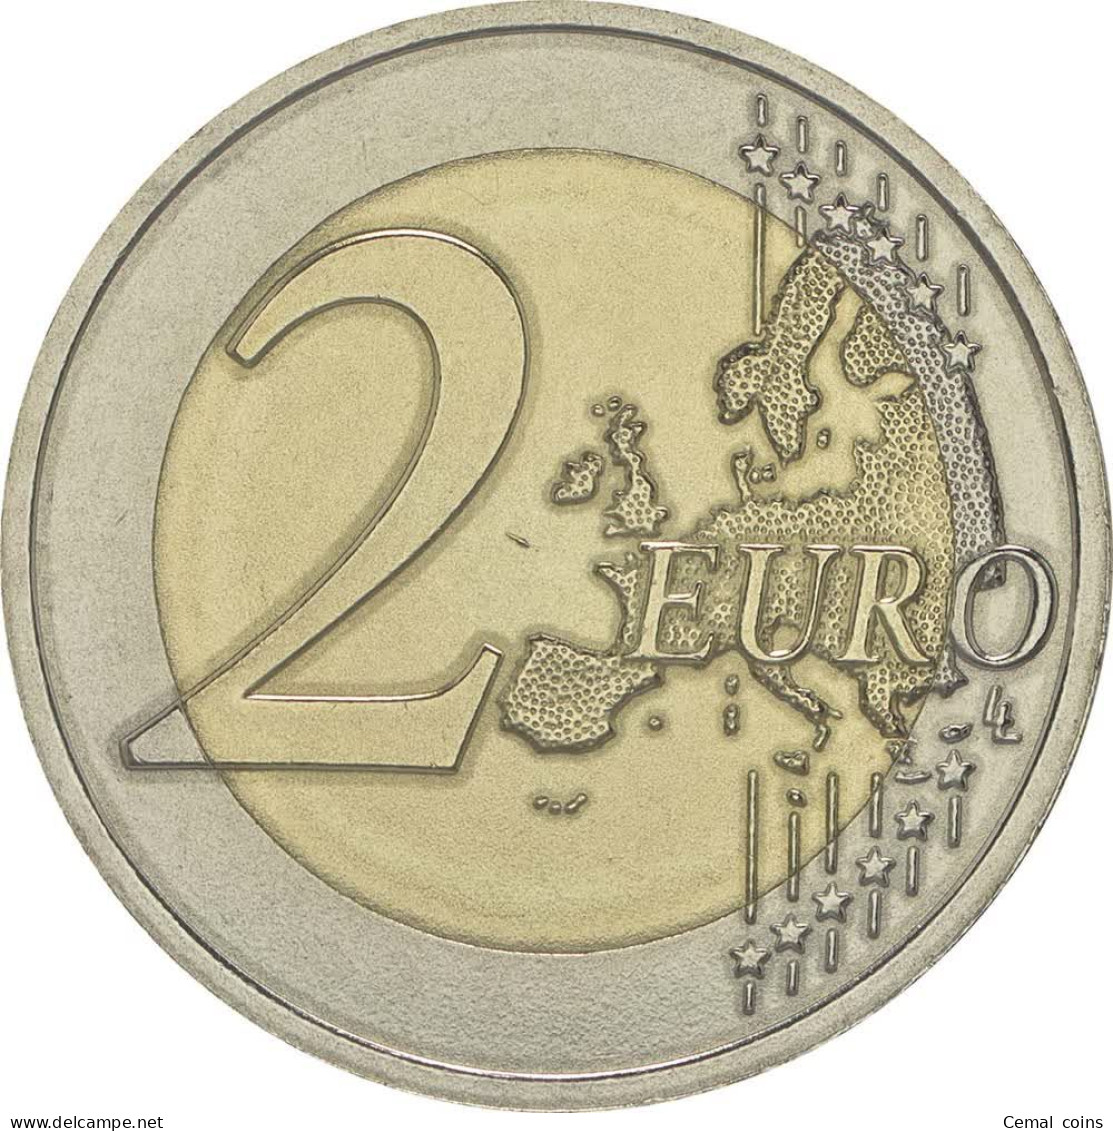 2 Euro 2015 Latvian Commemorative Coin - Stork. - Latvia